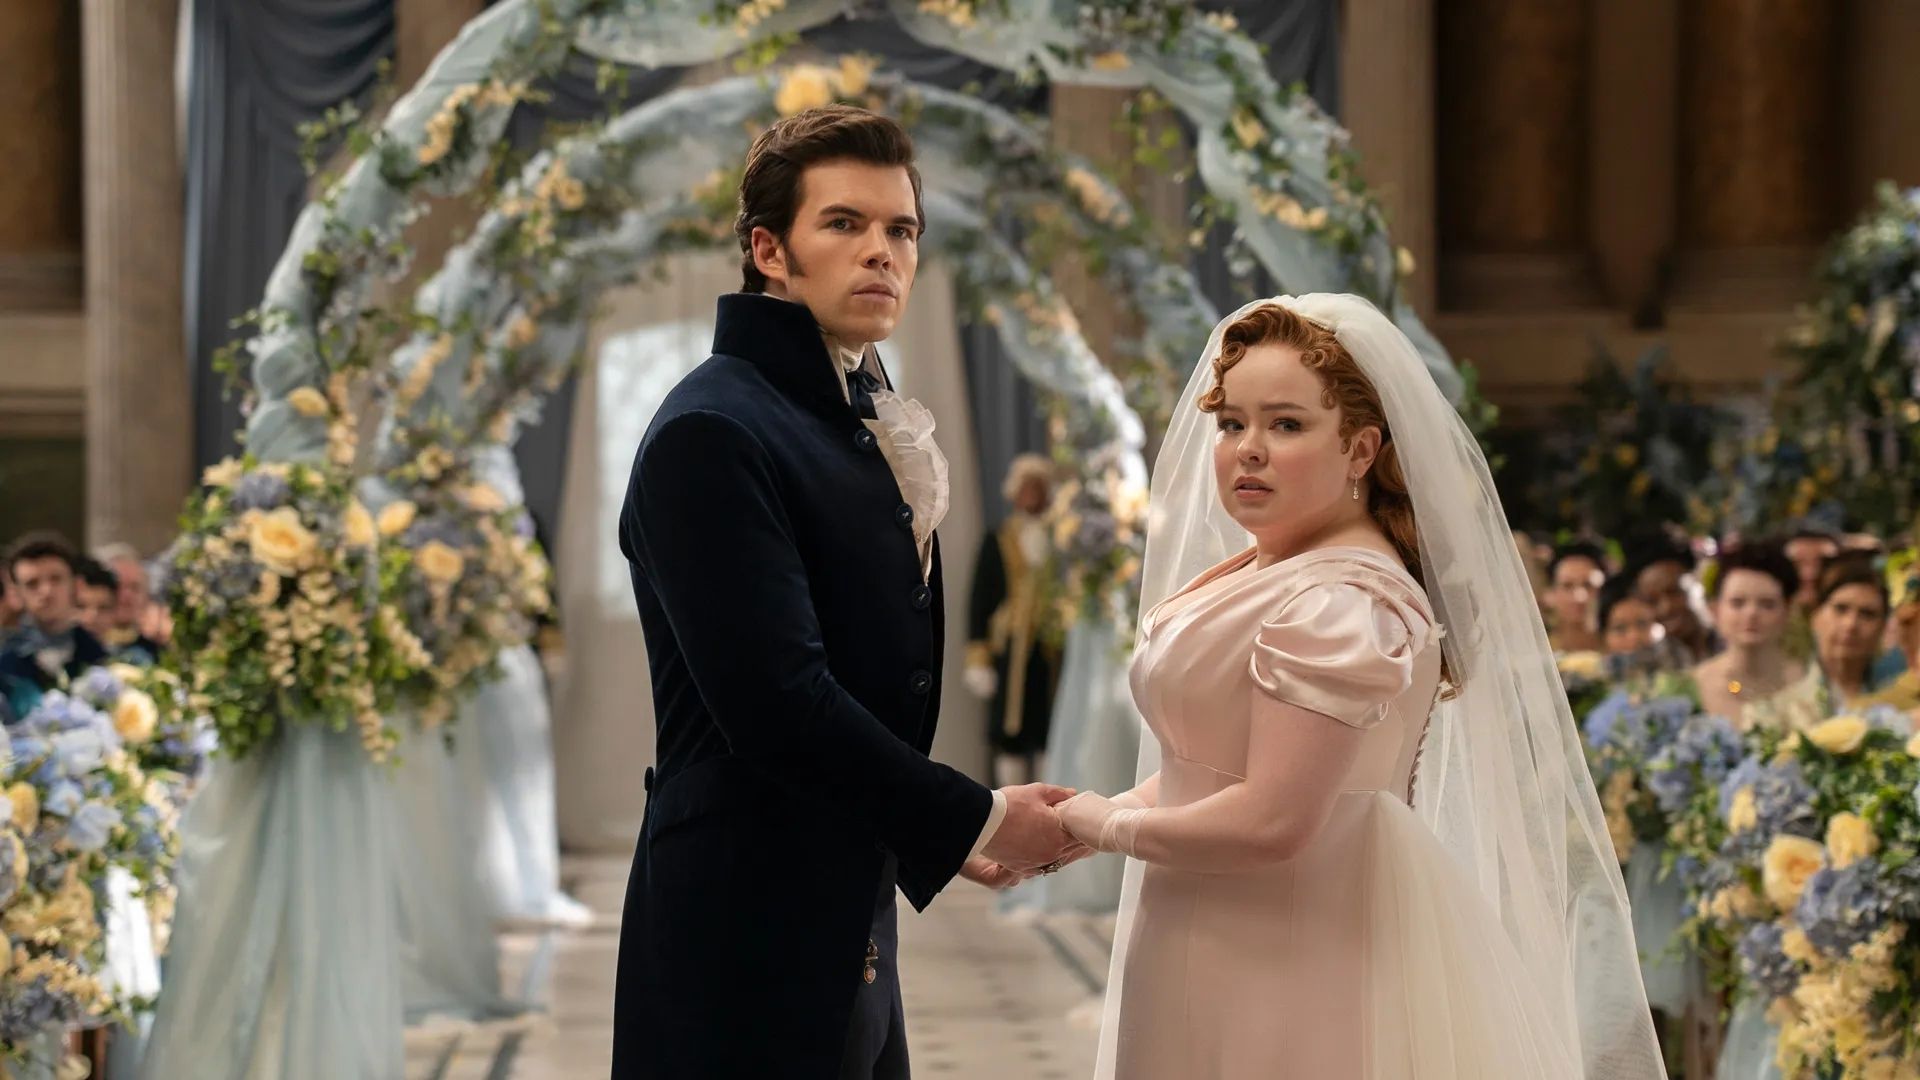 Colin and Penelope's wedding in Bridgerton Season 3